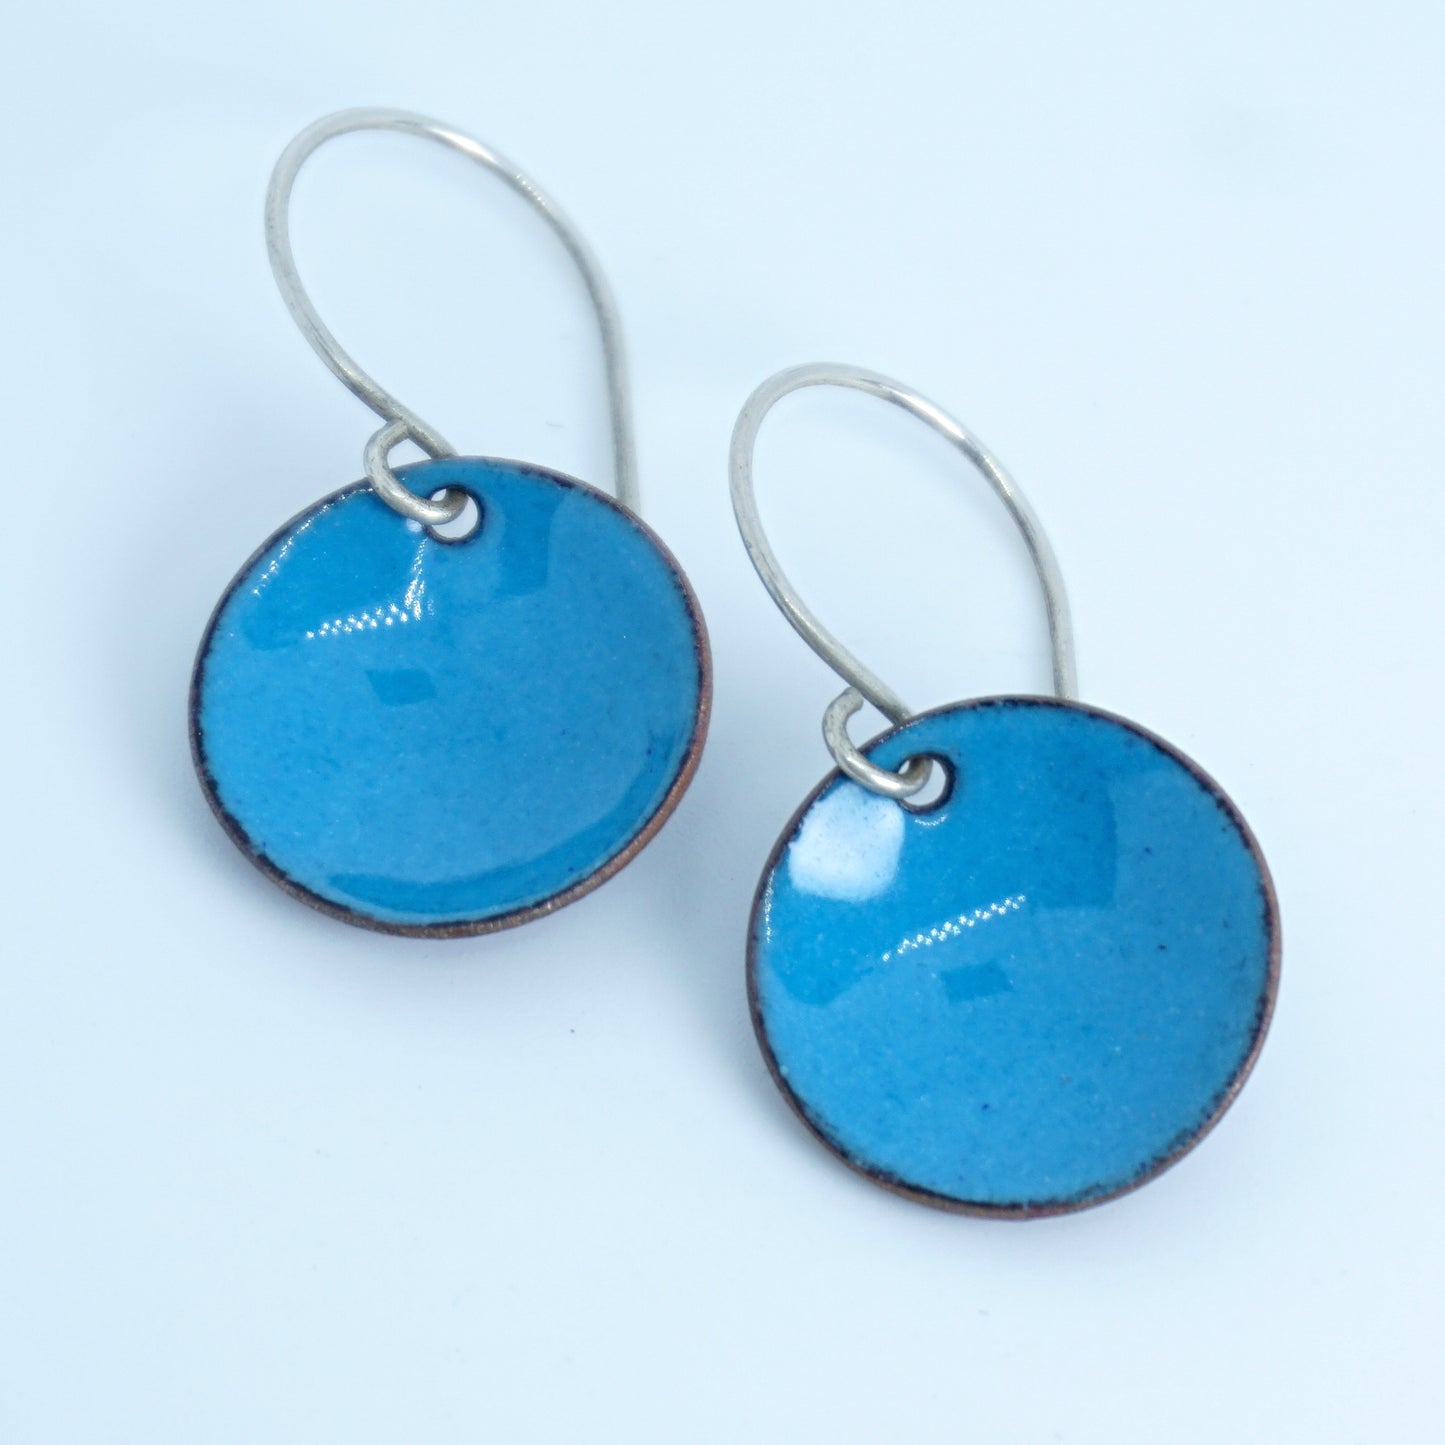 Teal Blue Enamel Disc Earrings